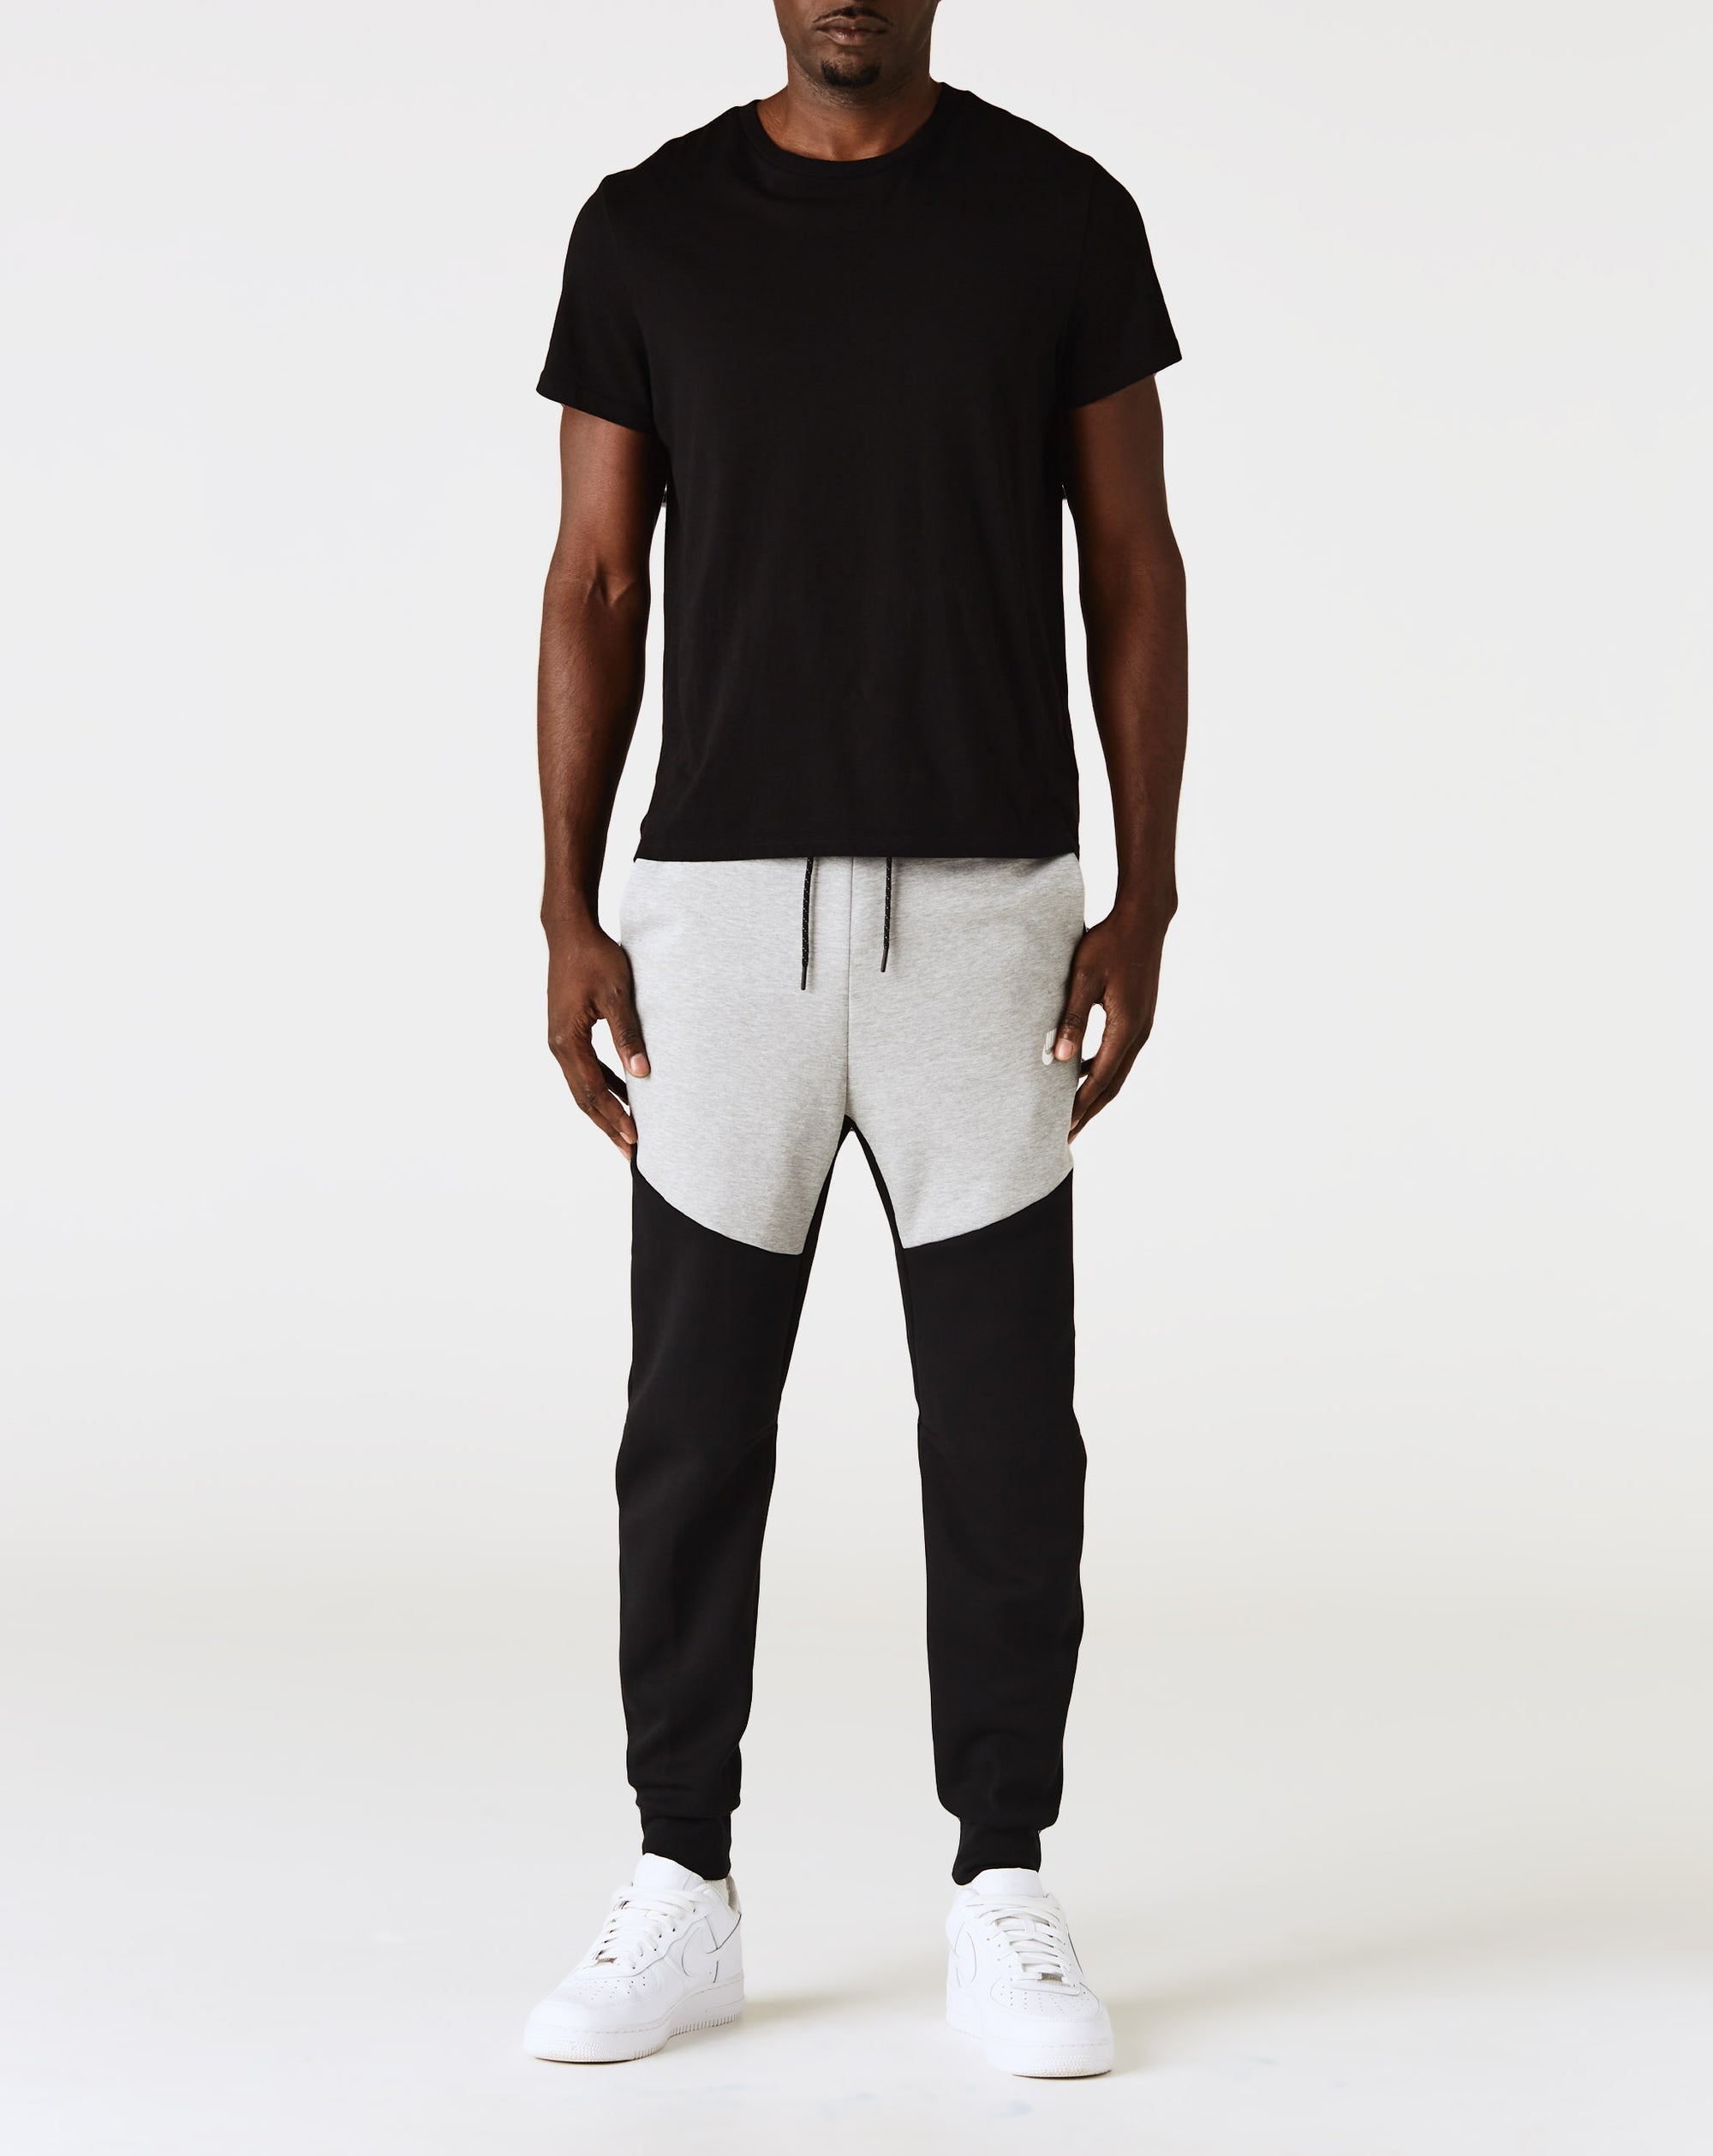 Nike Tech Fleece Slim Fit Joggers Pants Black Grey Mens Sz 3XL CU4495-016  NEW!!!